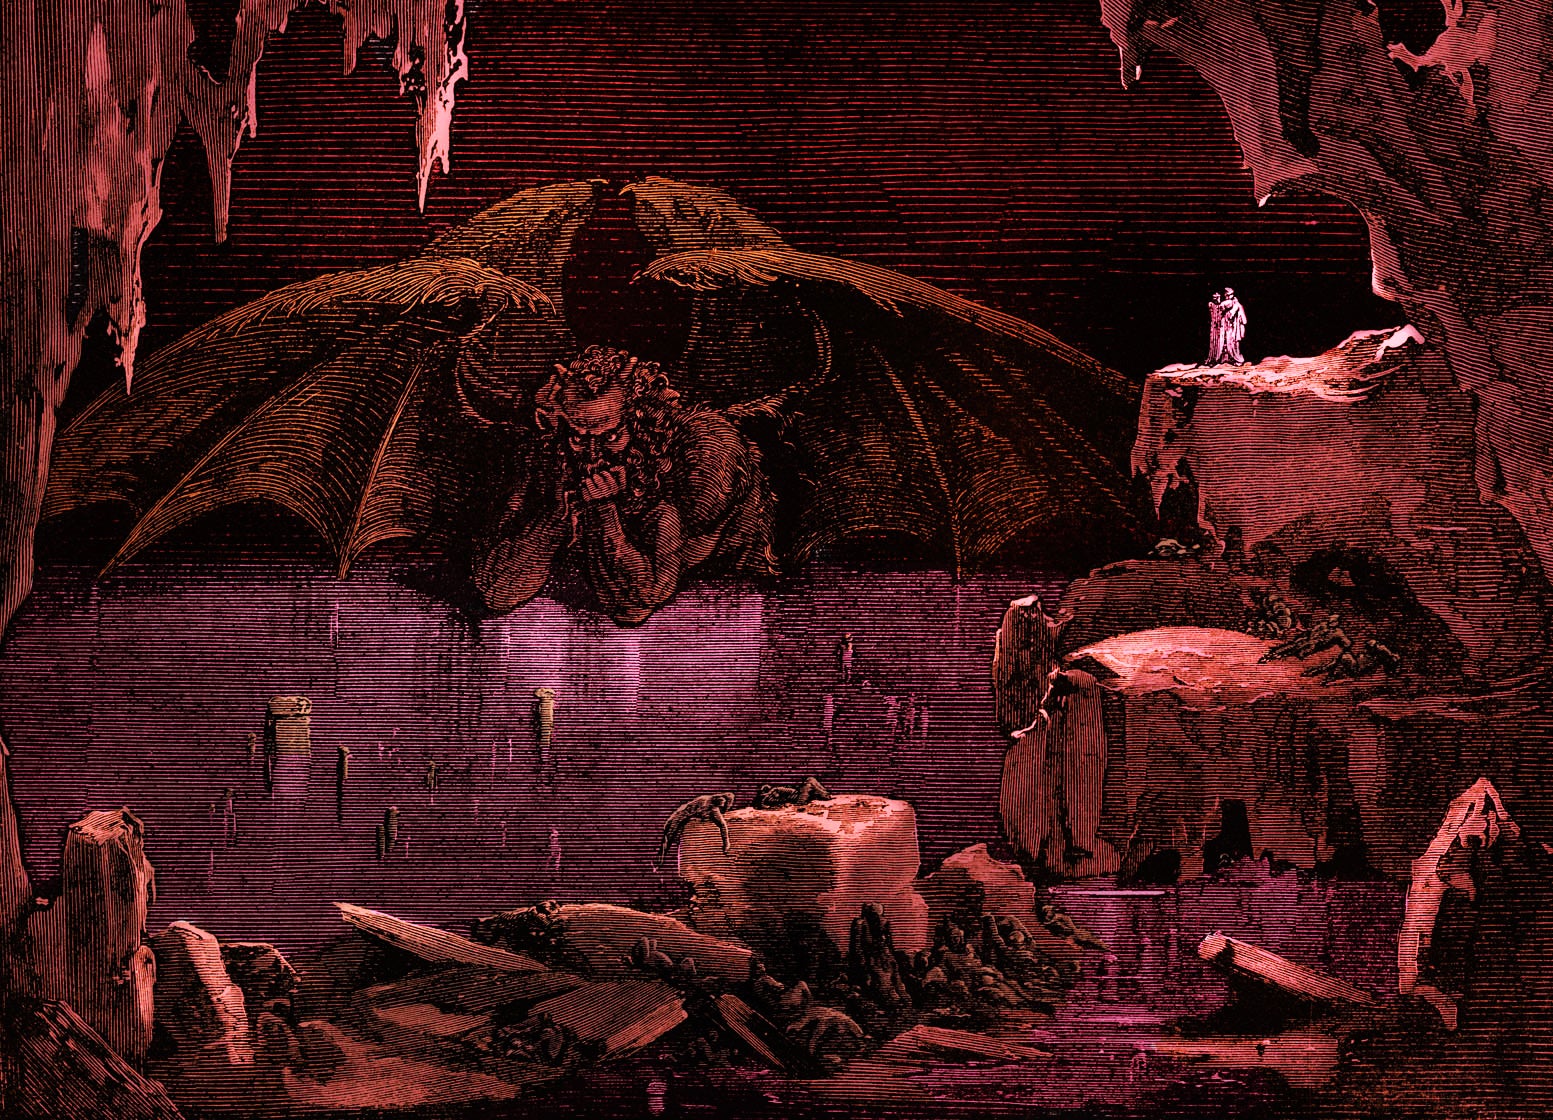 Dante's Inferno illustration by Gustave Doré